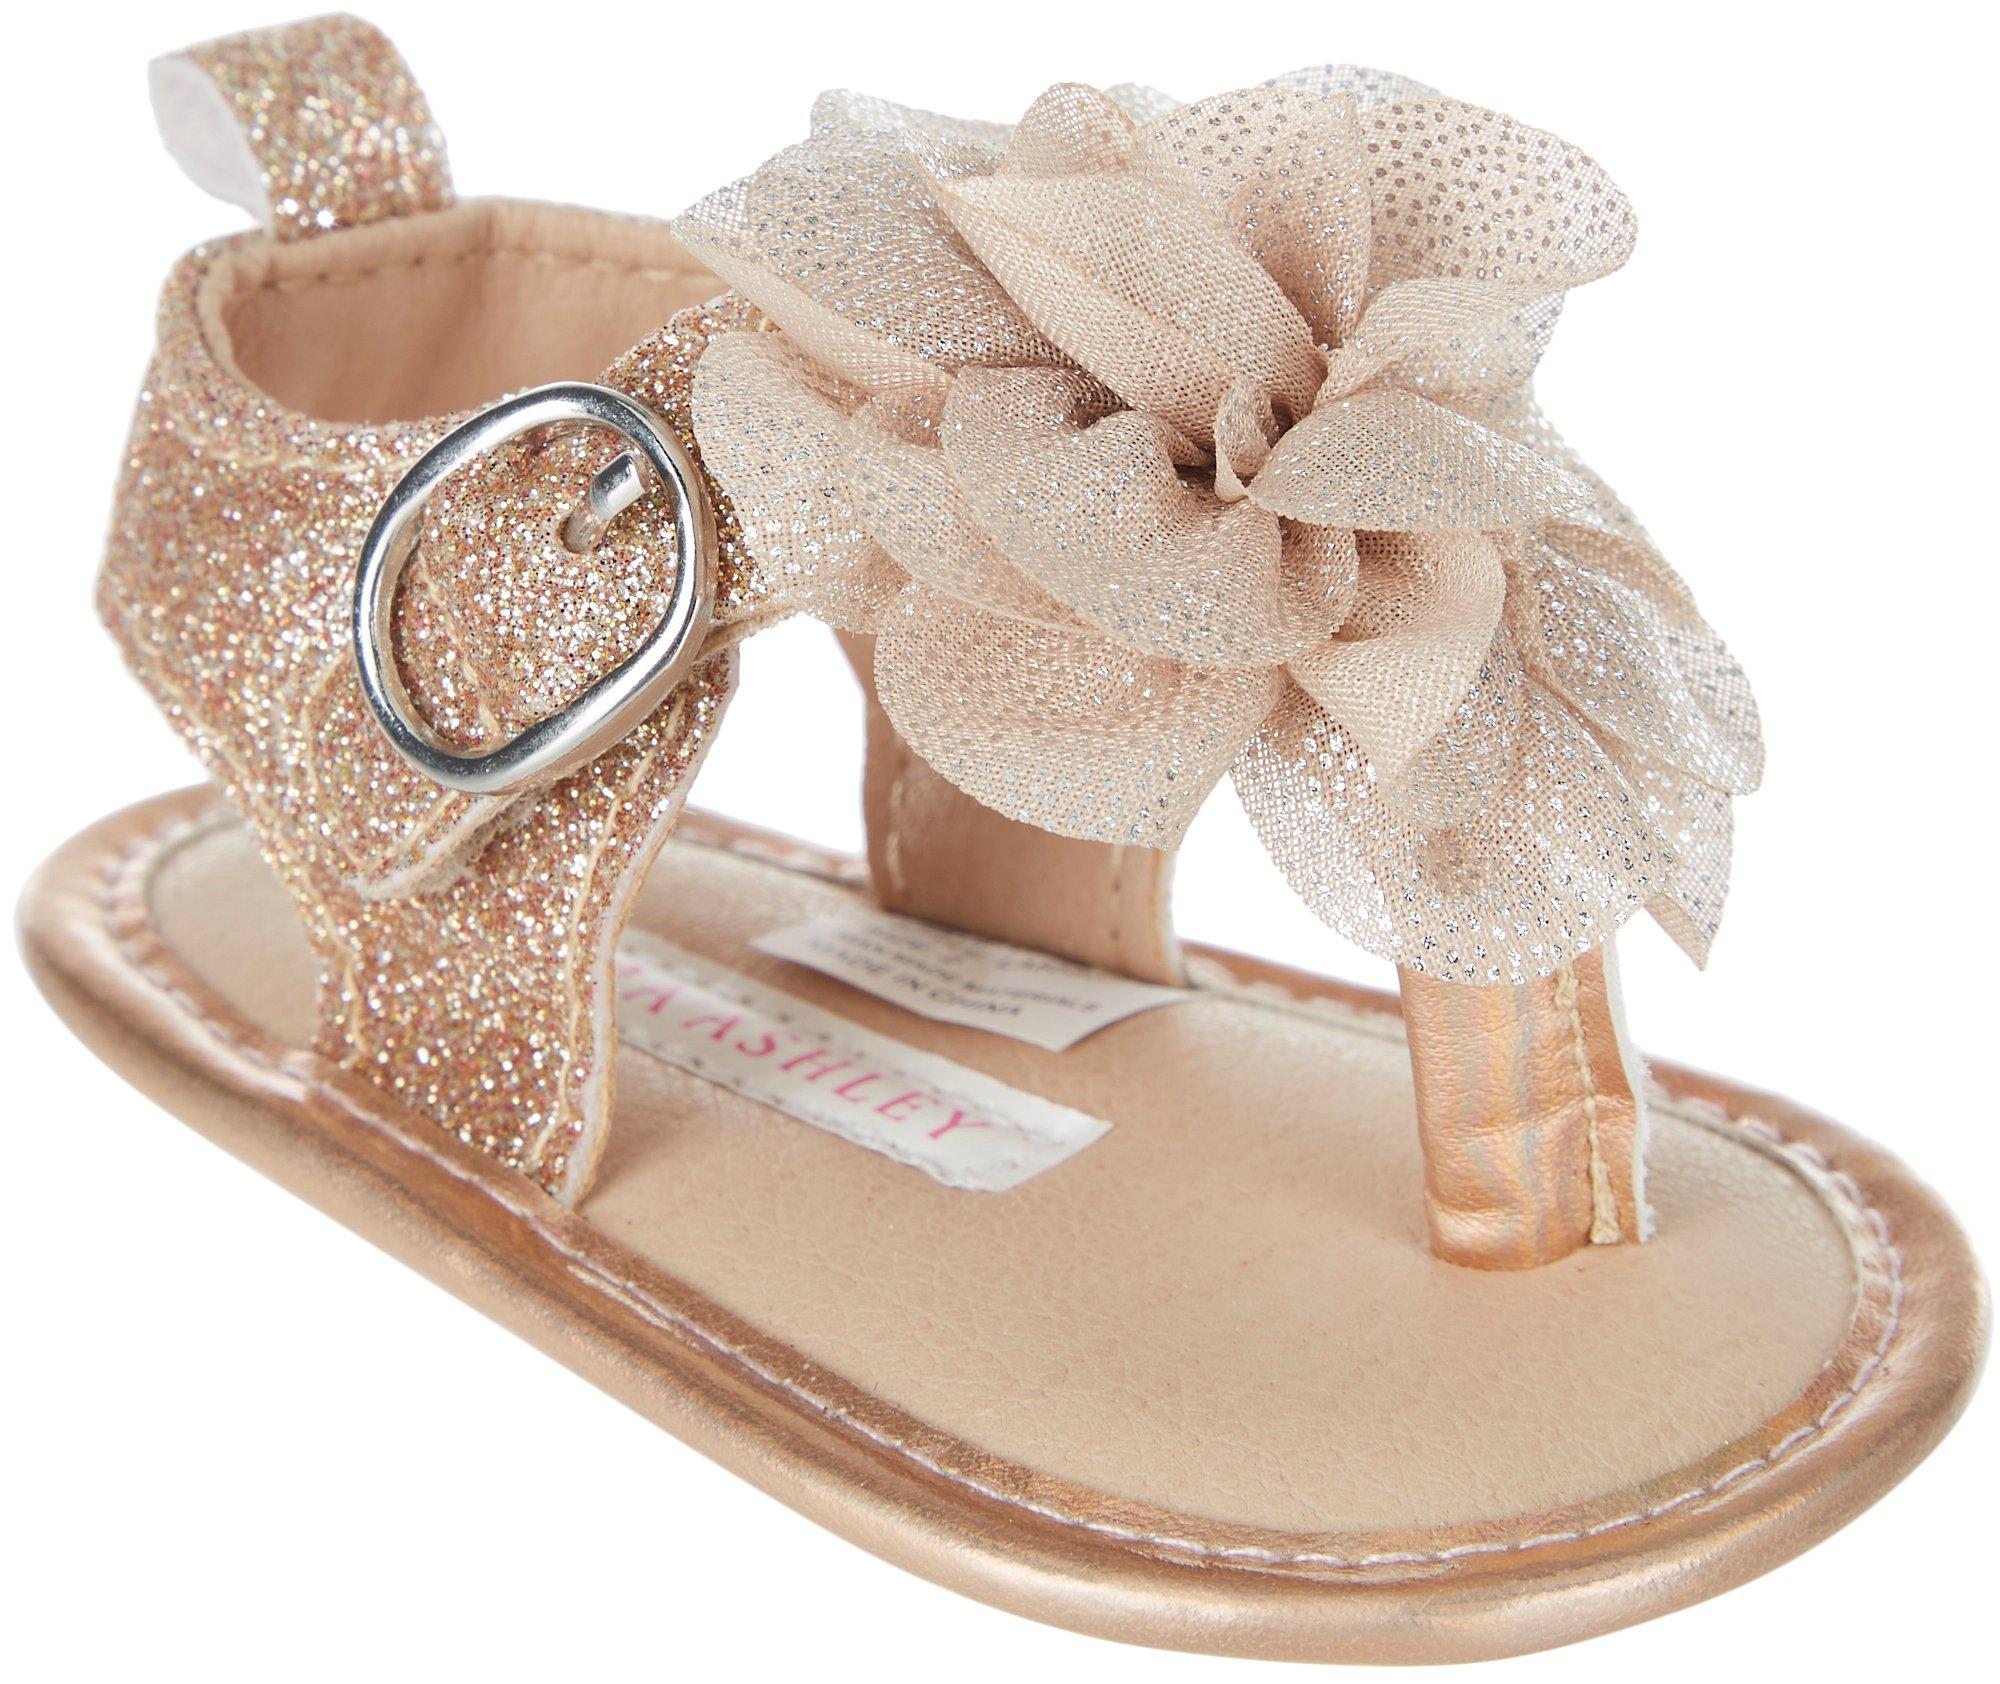 Laura Ashley Baby Girls Flower Sparkles Sandals